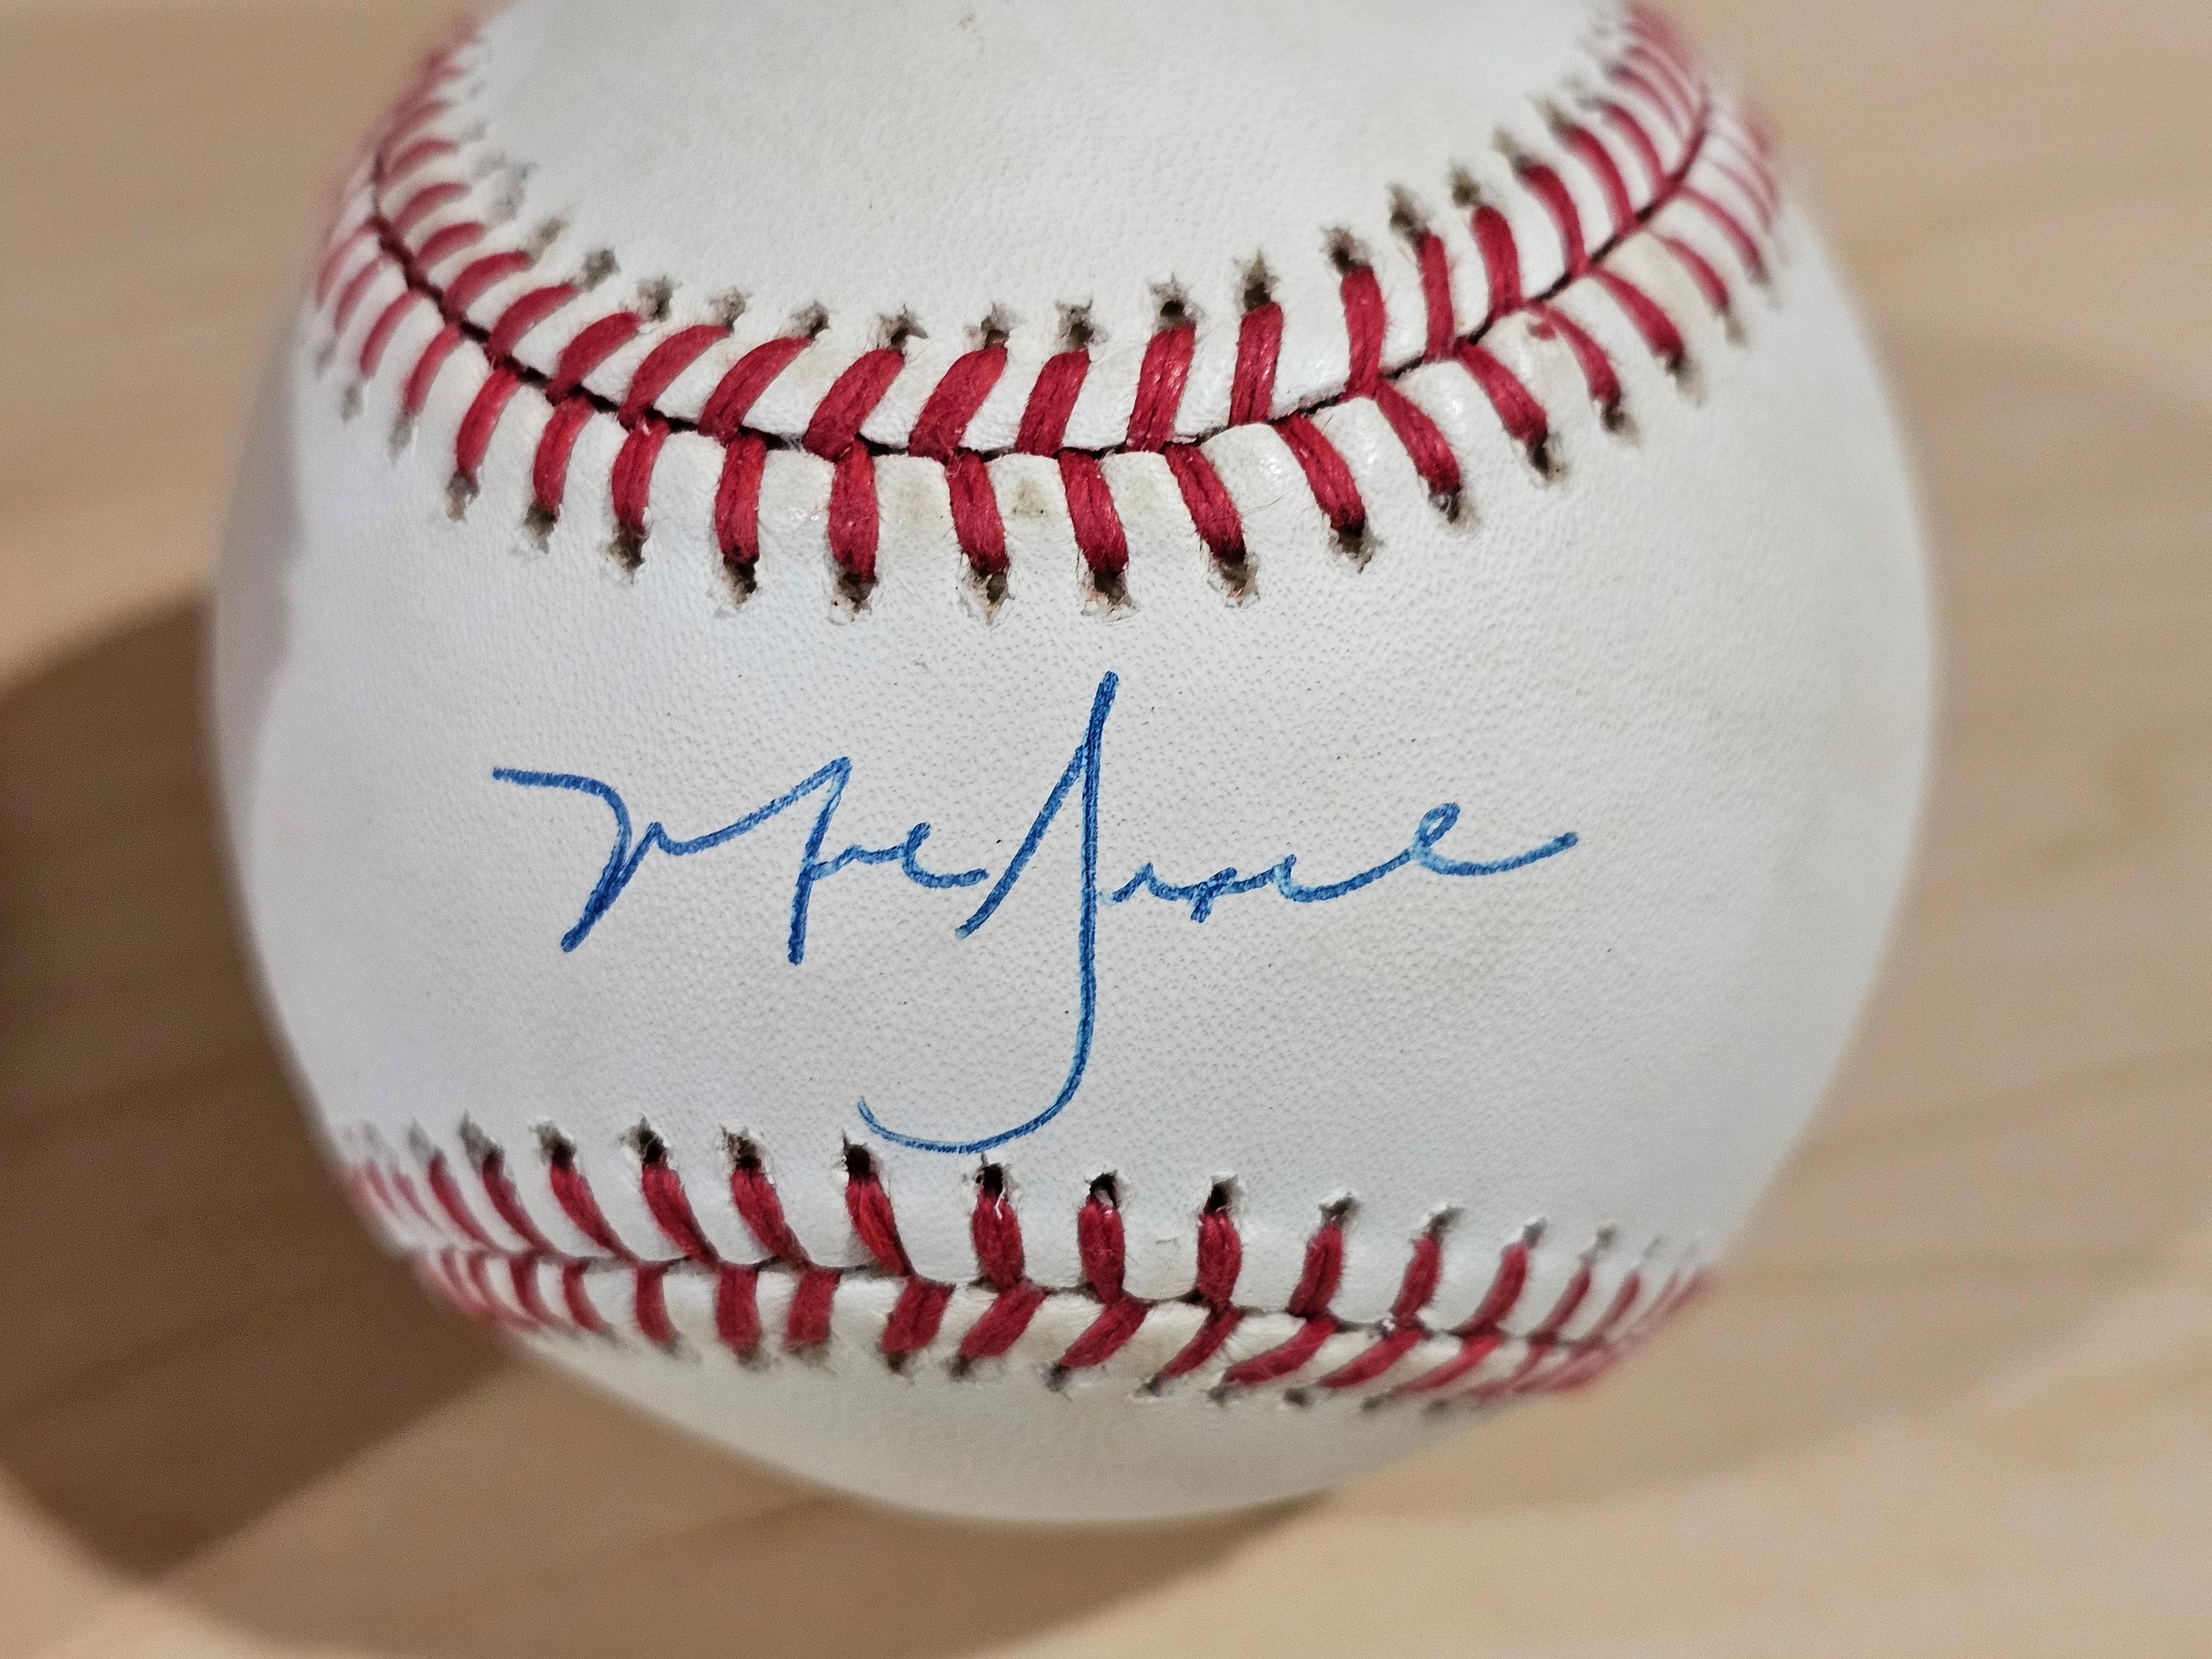 Player Signed Baseball in Holder Box